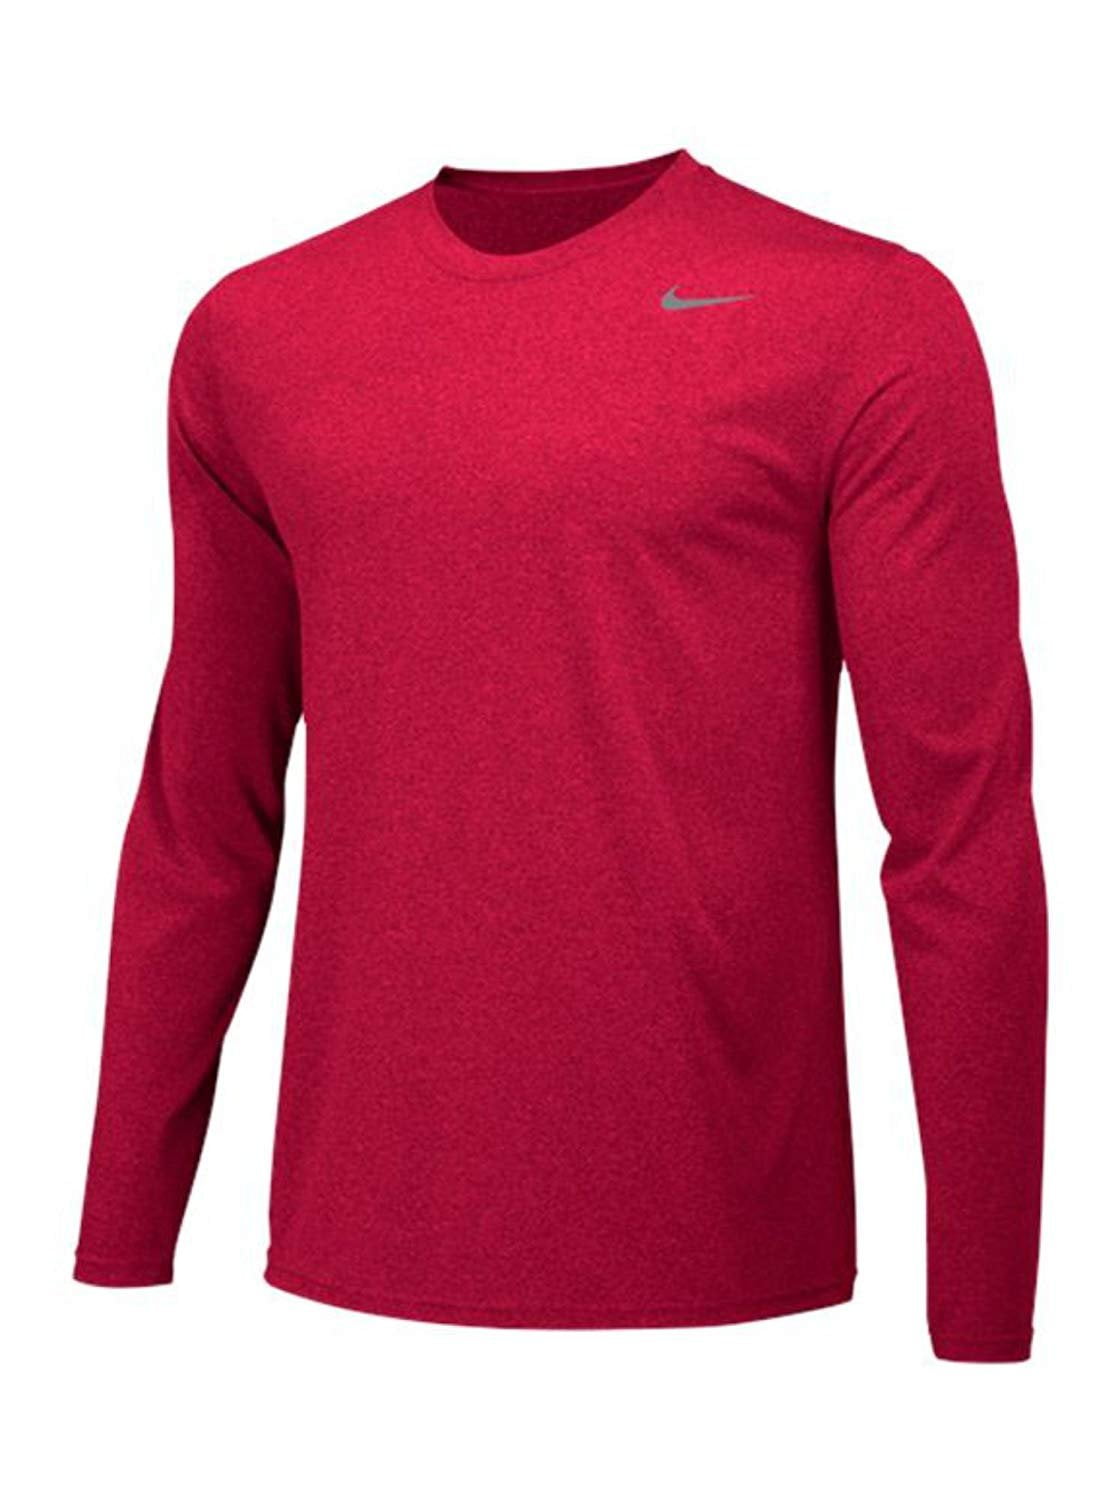 Nike Men's Team Legend Long Sleeve Training Top - University RED/Cool Grey  - 727980-657 - SZ. X-Large